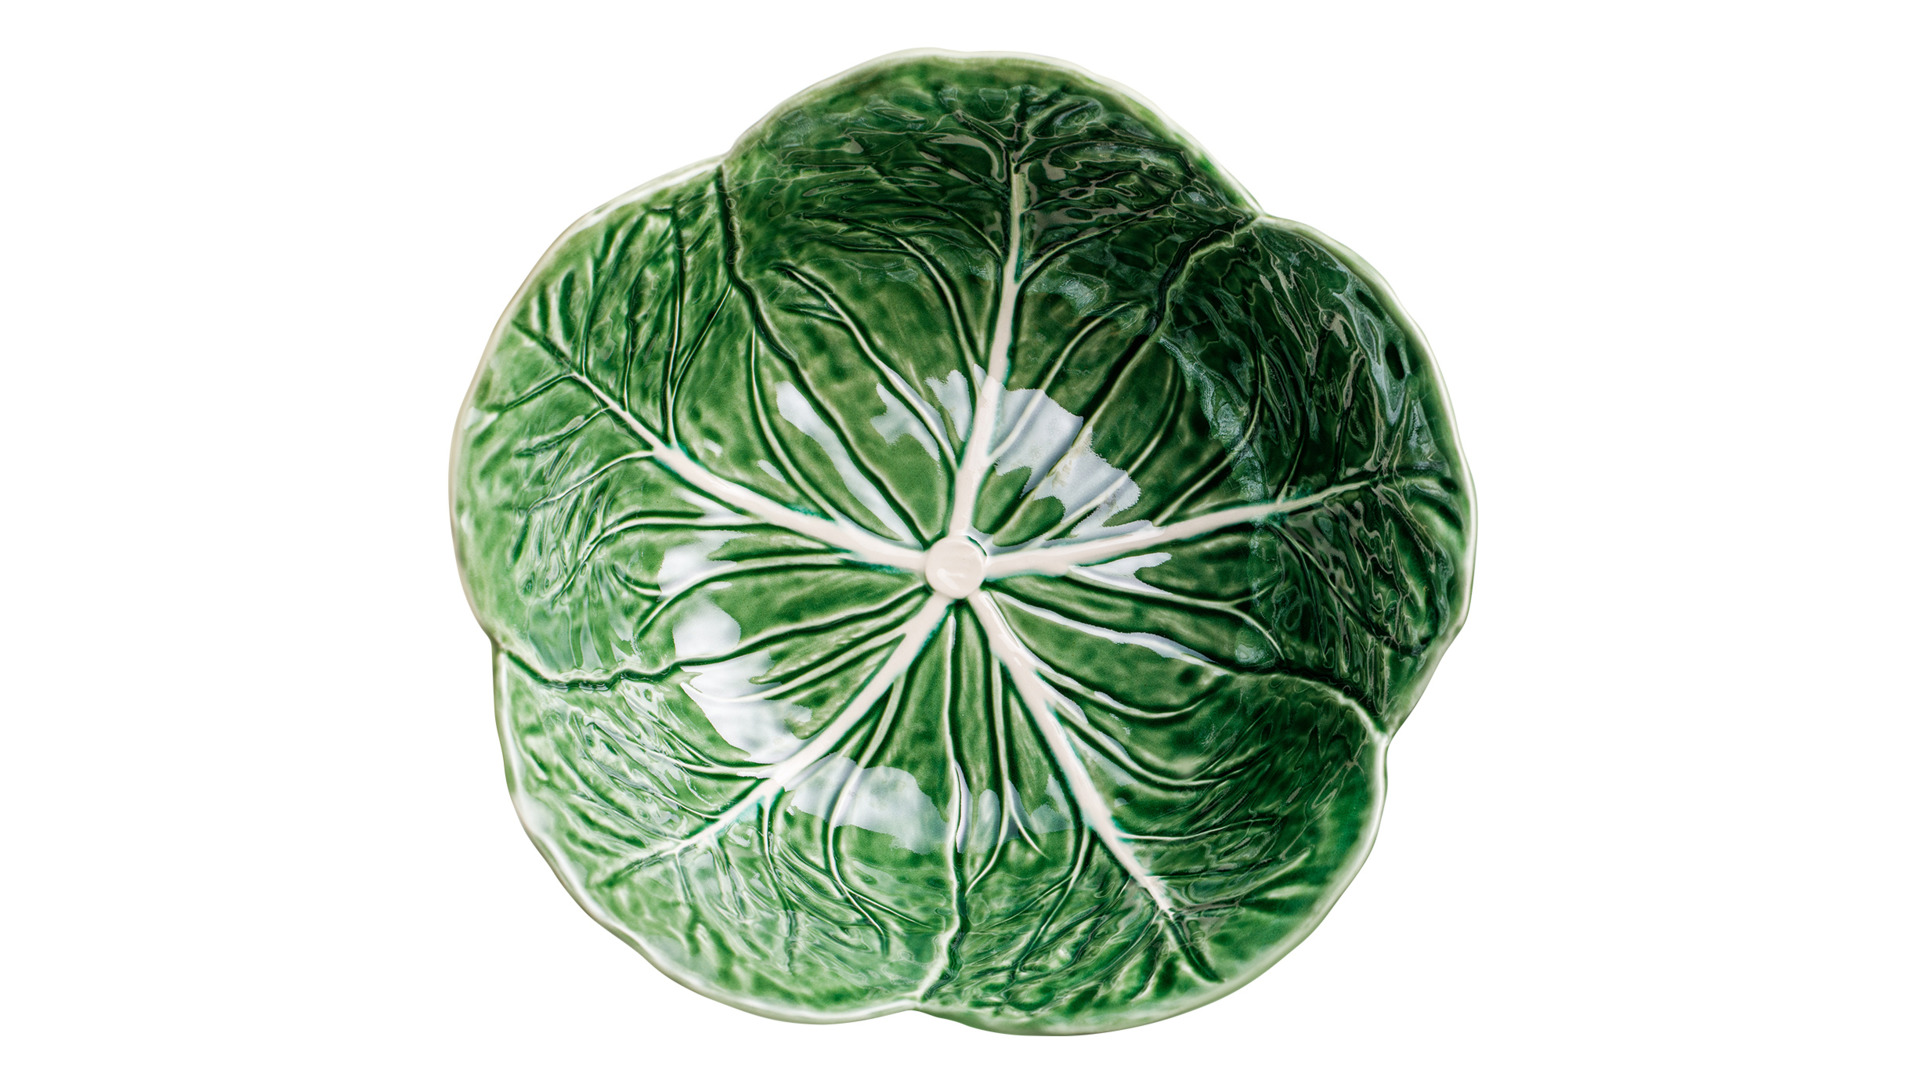 Салатник с резным краем Bordallo Pinheiro Капуста 29,5 см, керамика